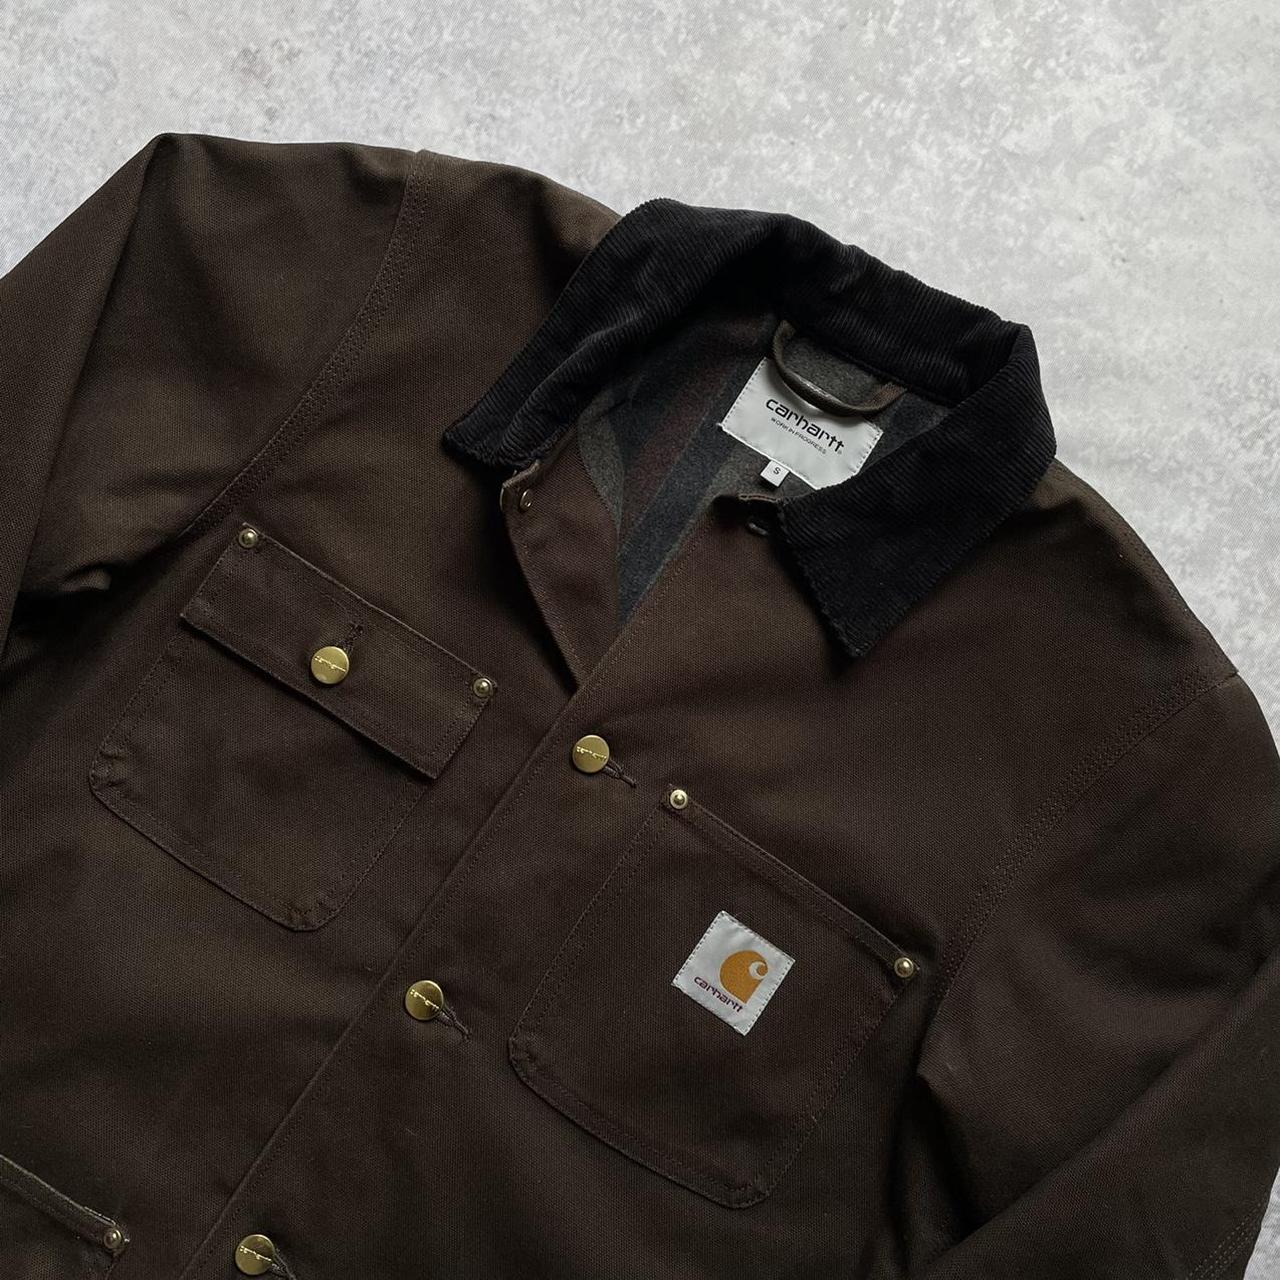 Carhartt Michigan Coat Jacket Brown with black... - Depop